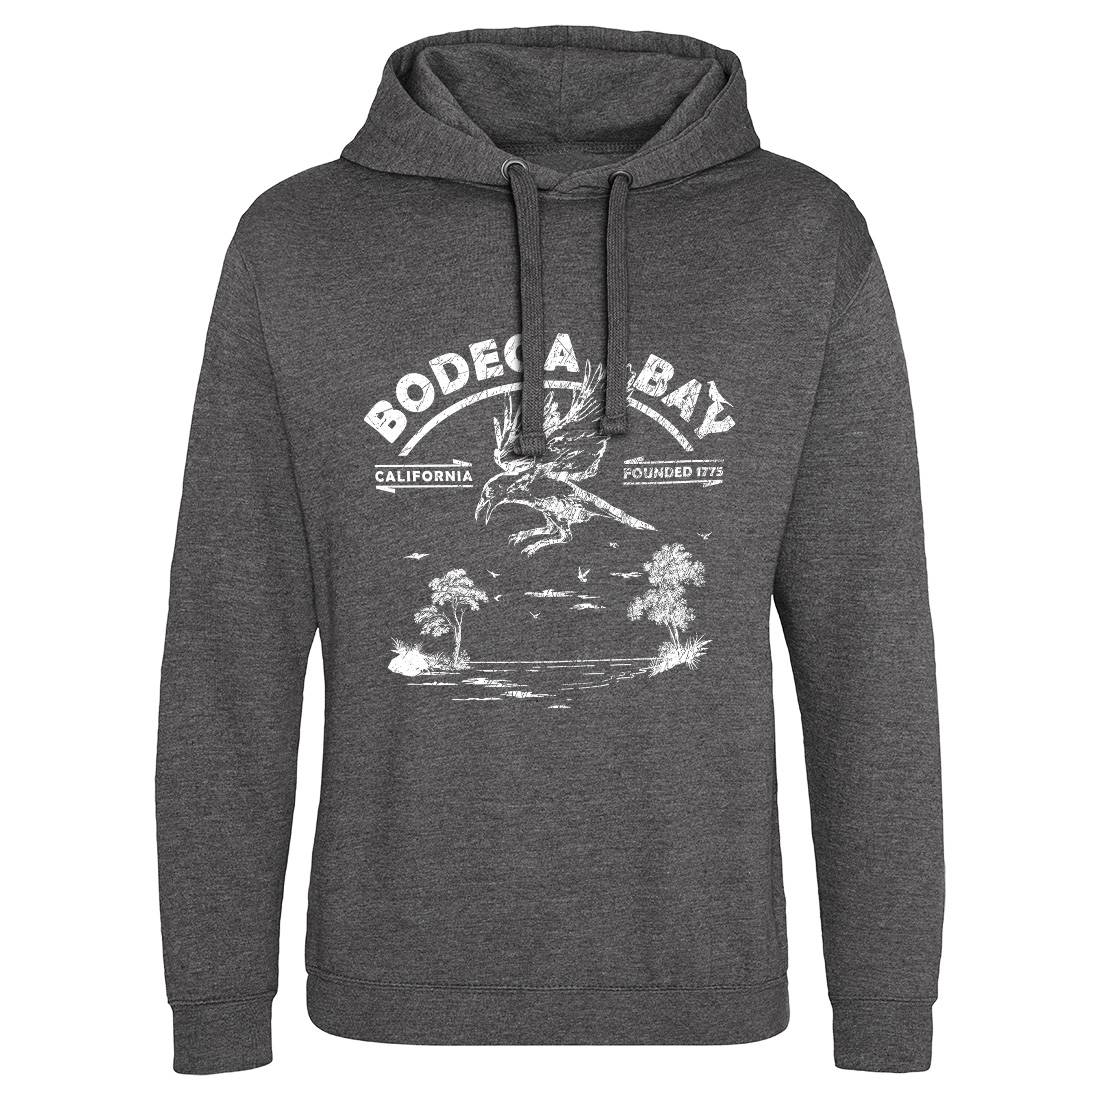 Bodega Bay Mens Hoodie Without Pocket Horror D310